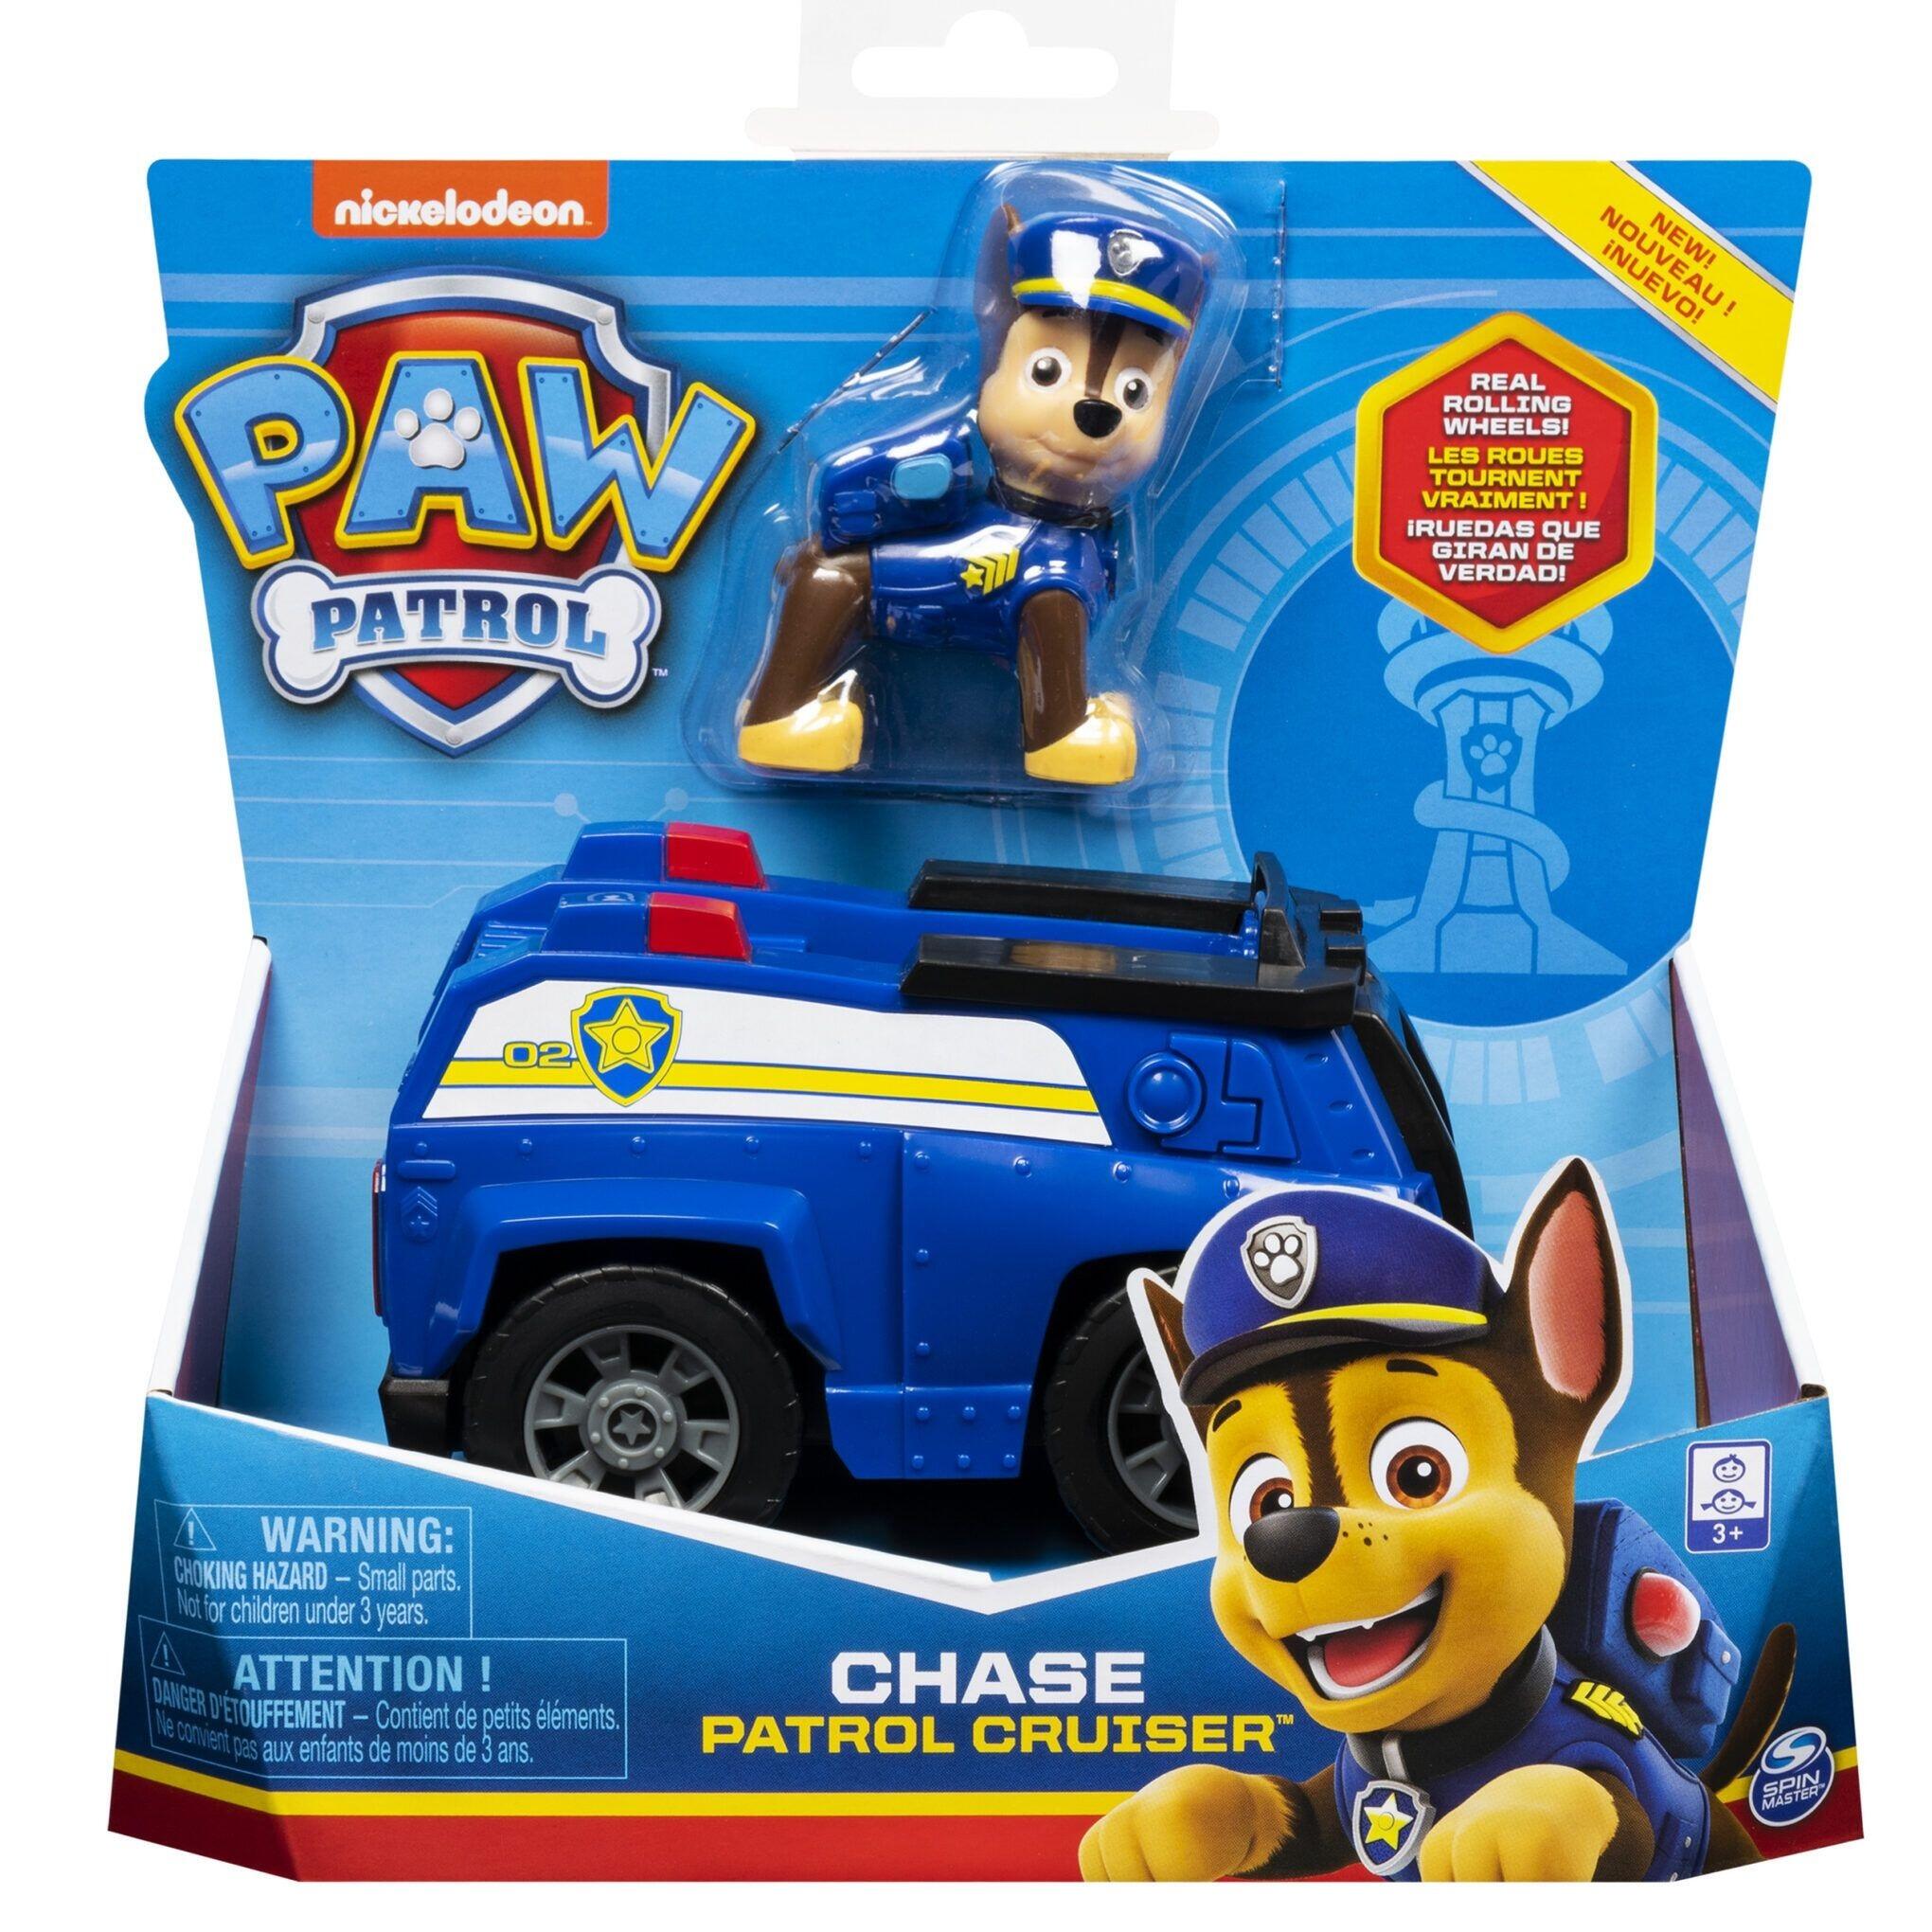 Paw Patrol Chase and Patrol Cruiser